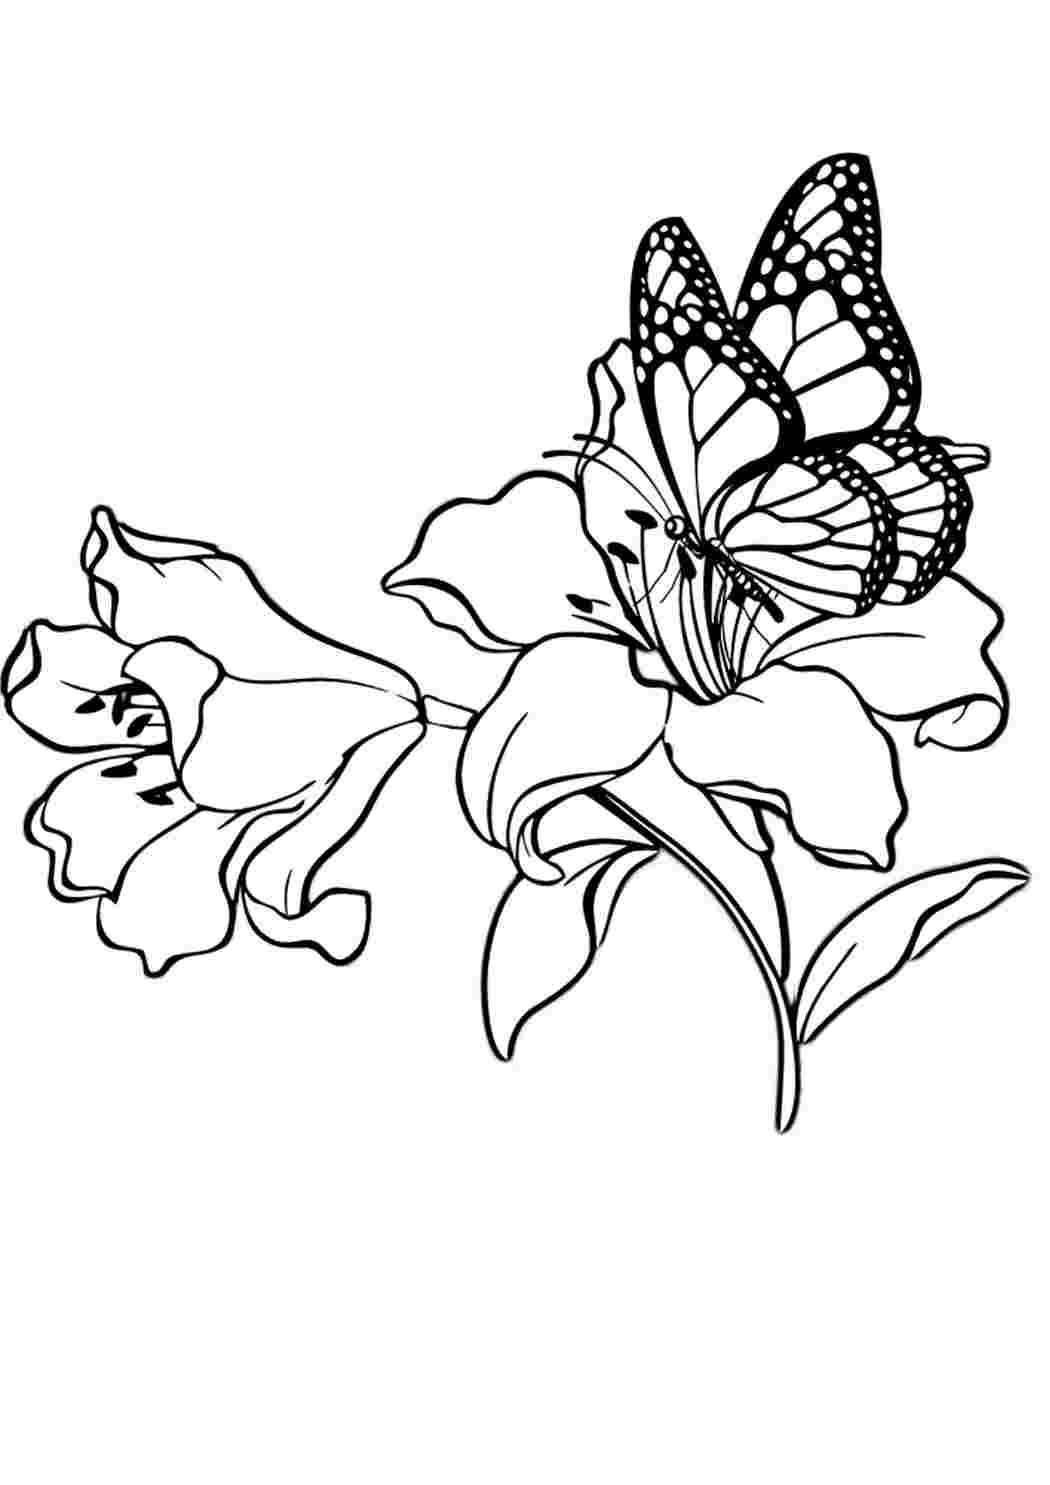 Раскраски Бабочка сидит на цветочке - раскраска. Бесплатные раскраски. Бабочка сидит на цветочке - раскраска. Печатать раскарску.